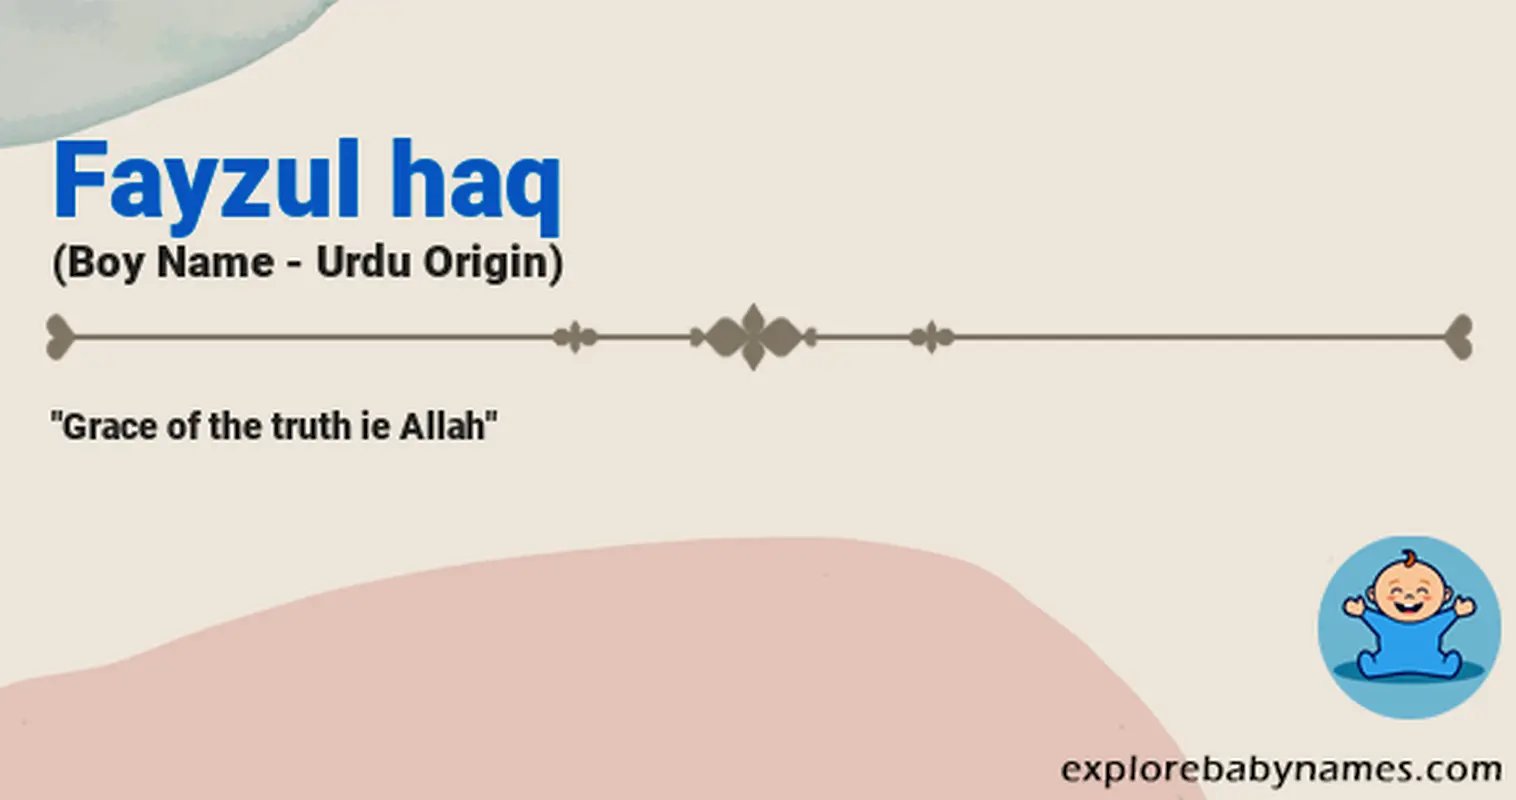 Meaning of Fayzul haq